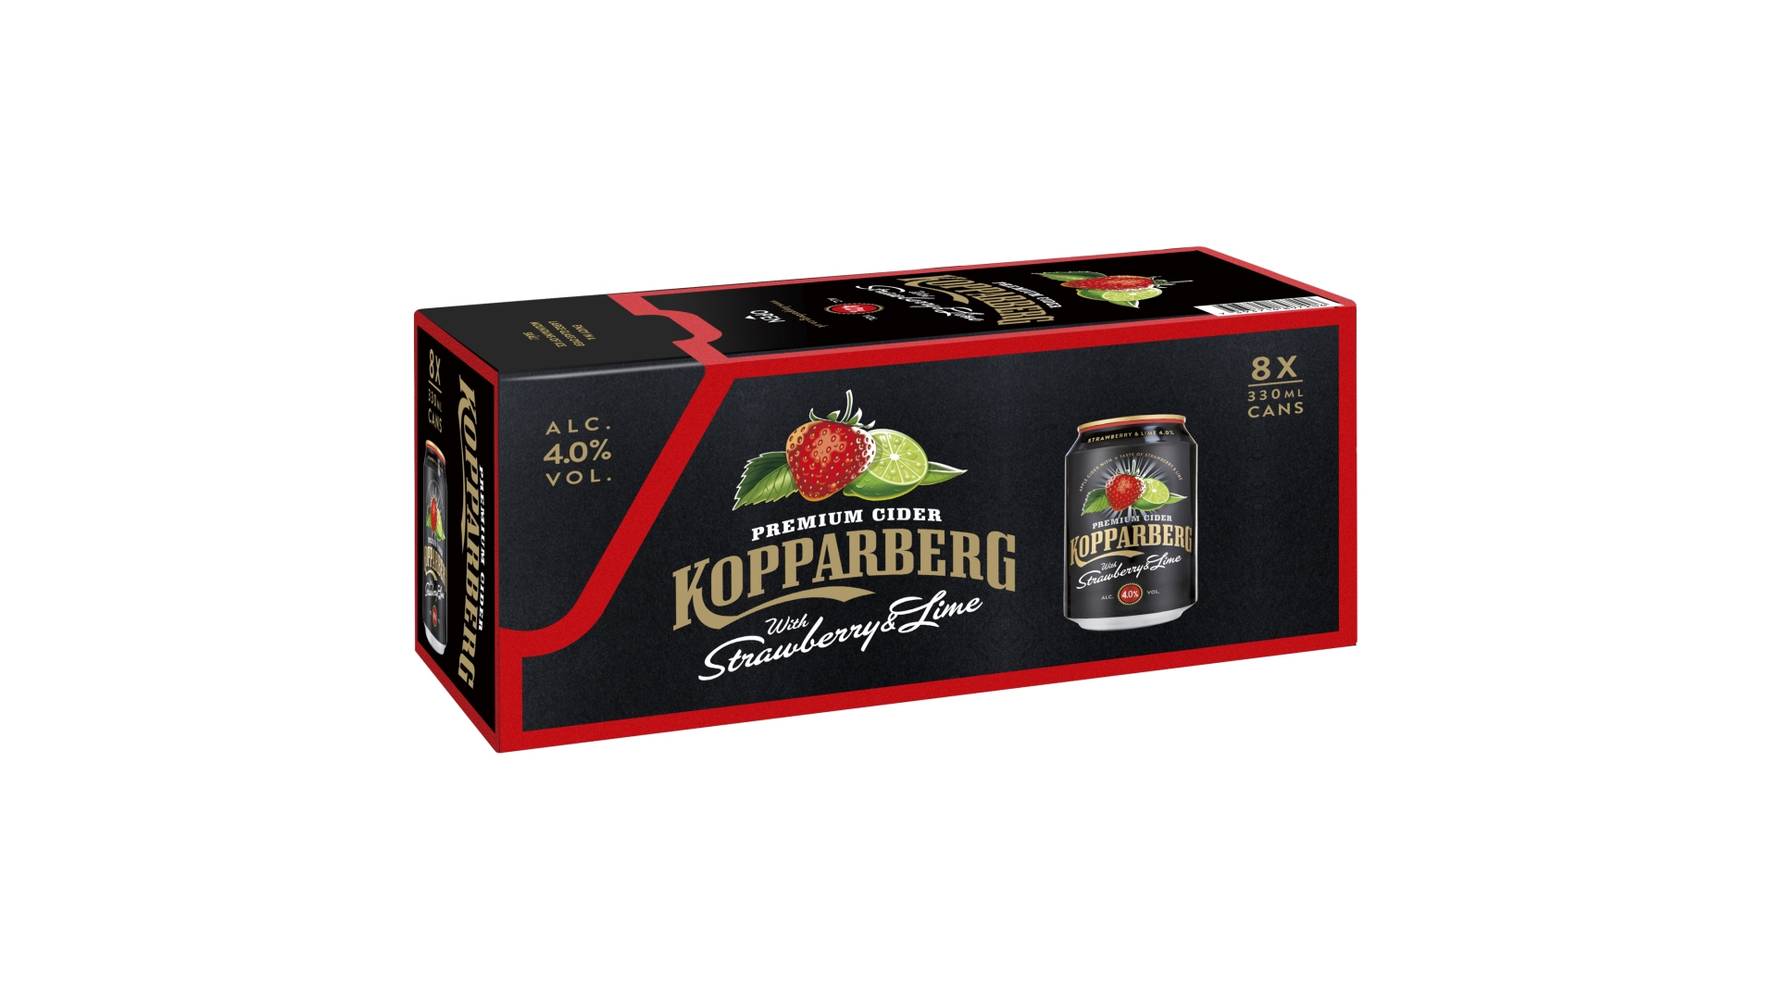 Kopparberg Premium Cider with Strawberry & Lime 8 x 330ml